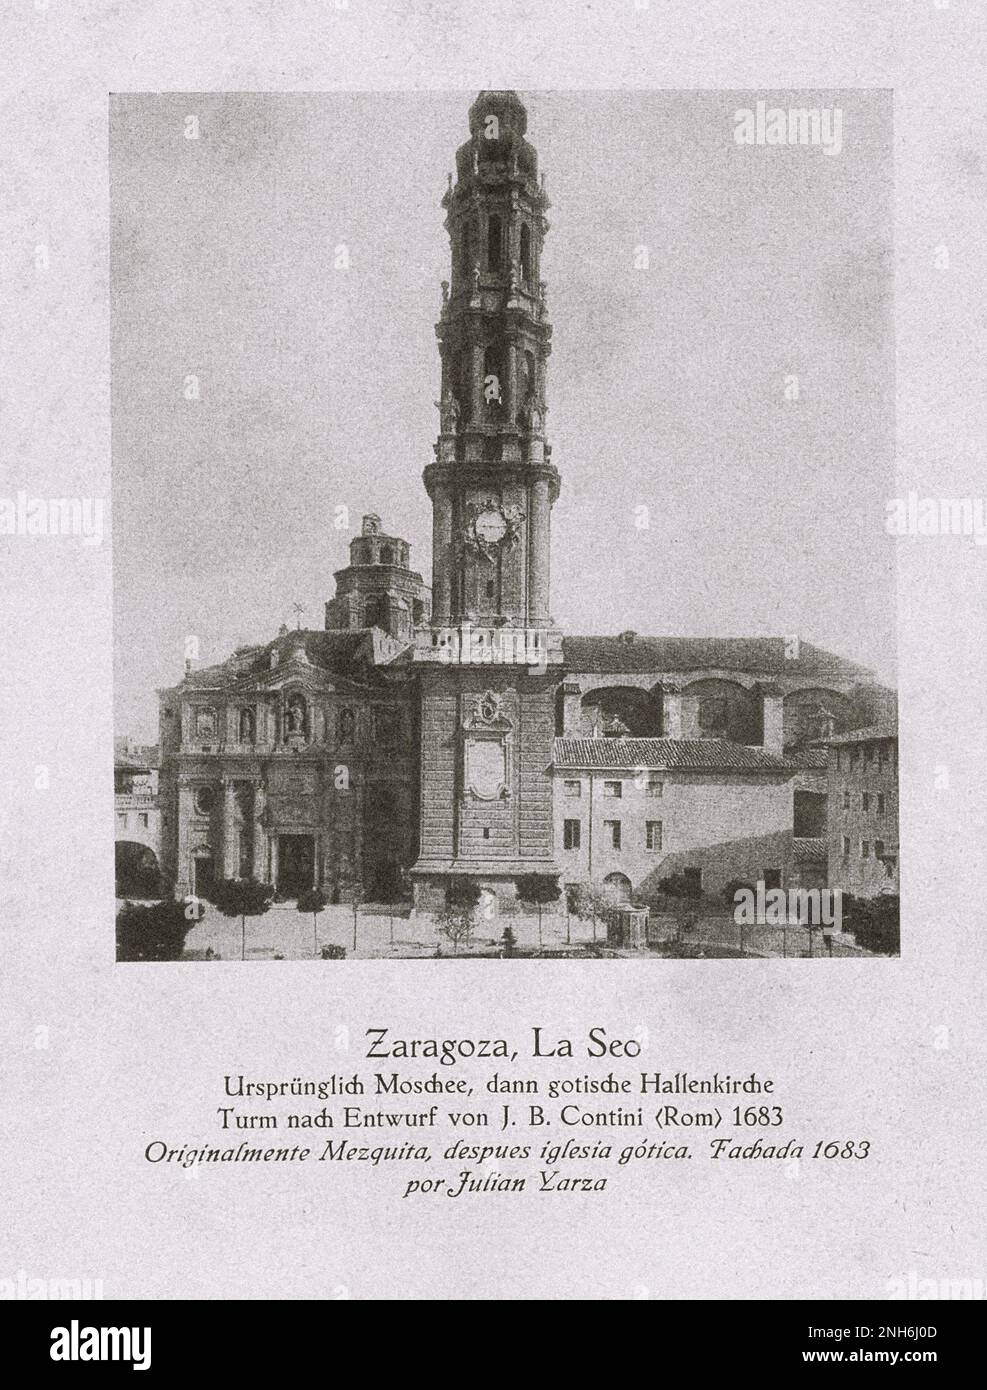 Architecture of Old Spain. Cathedral of the Savior of Zaragoza (Catedral del Salvador or La Seo de Zaragoza). Originally a mosque, then a Gothic hall church tower designed by J.B. Contini (Rome) 1683 Stock Photo